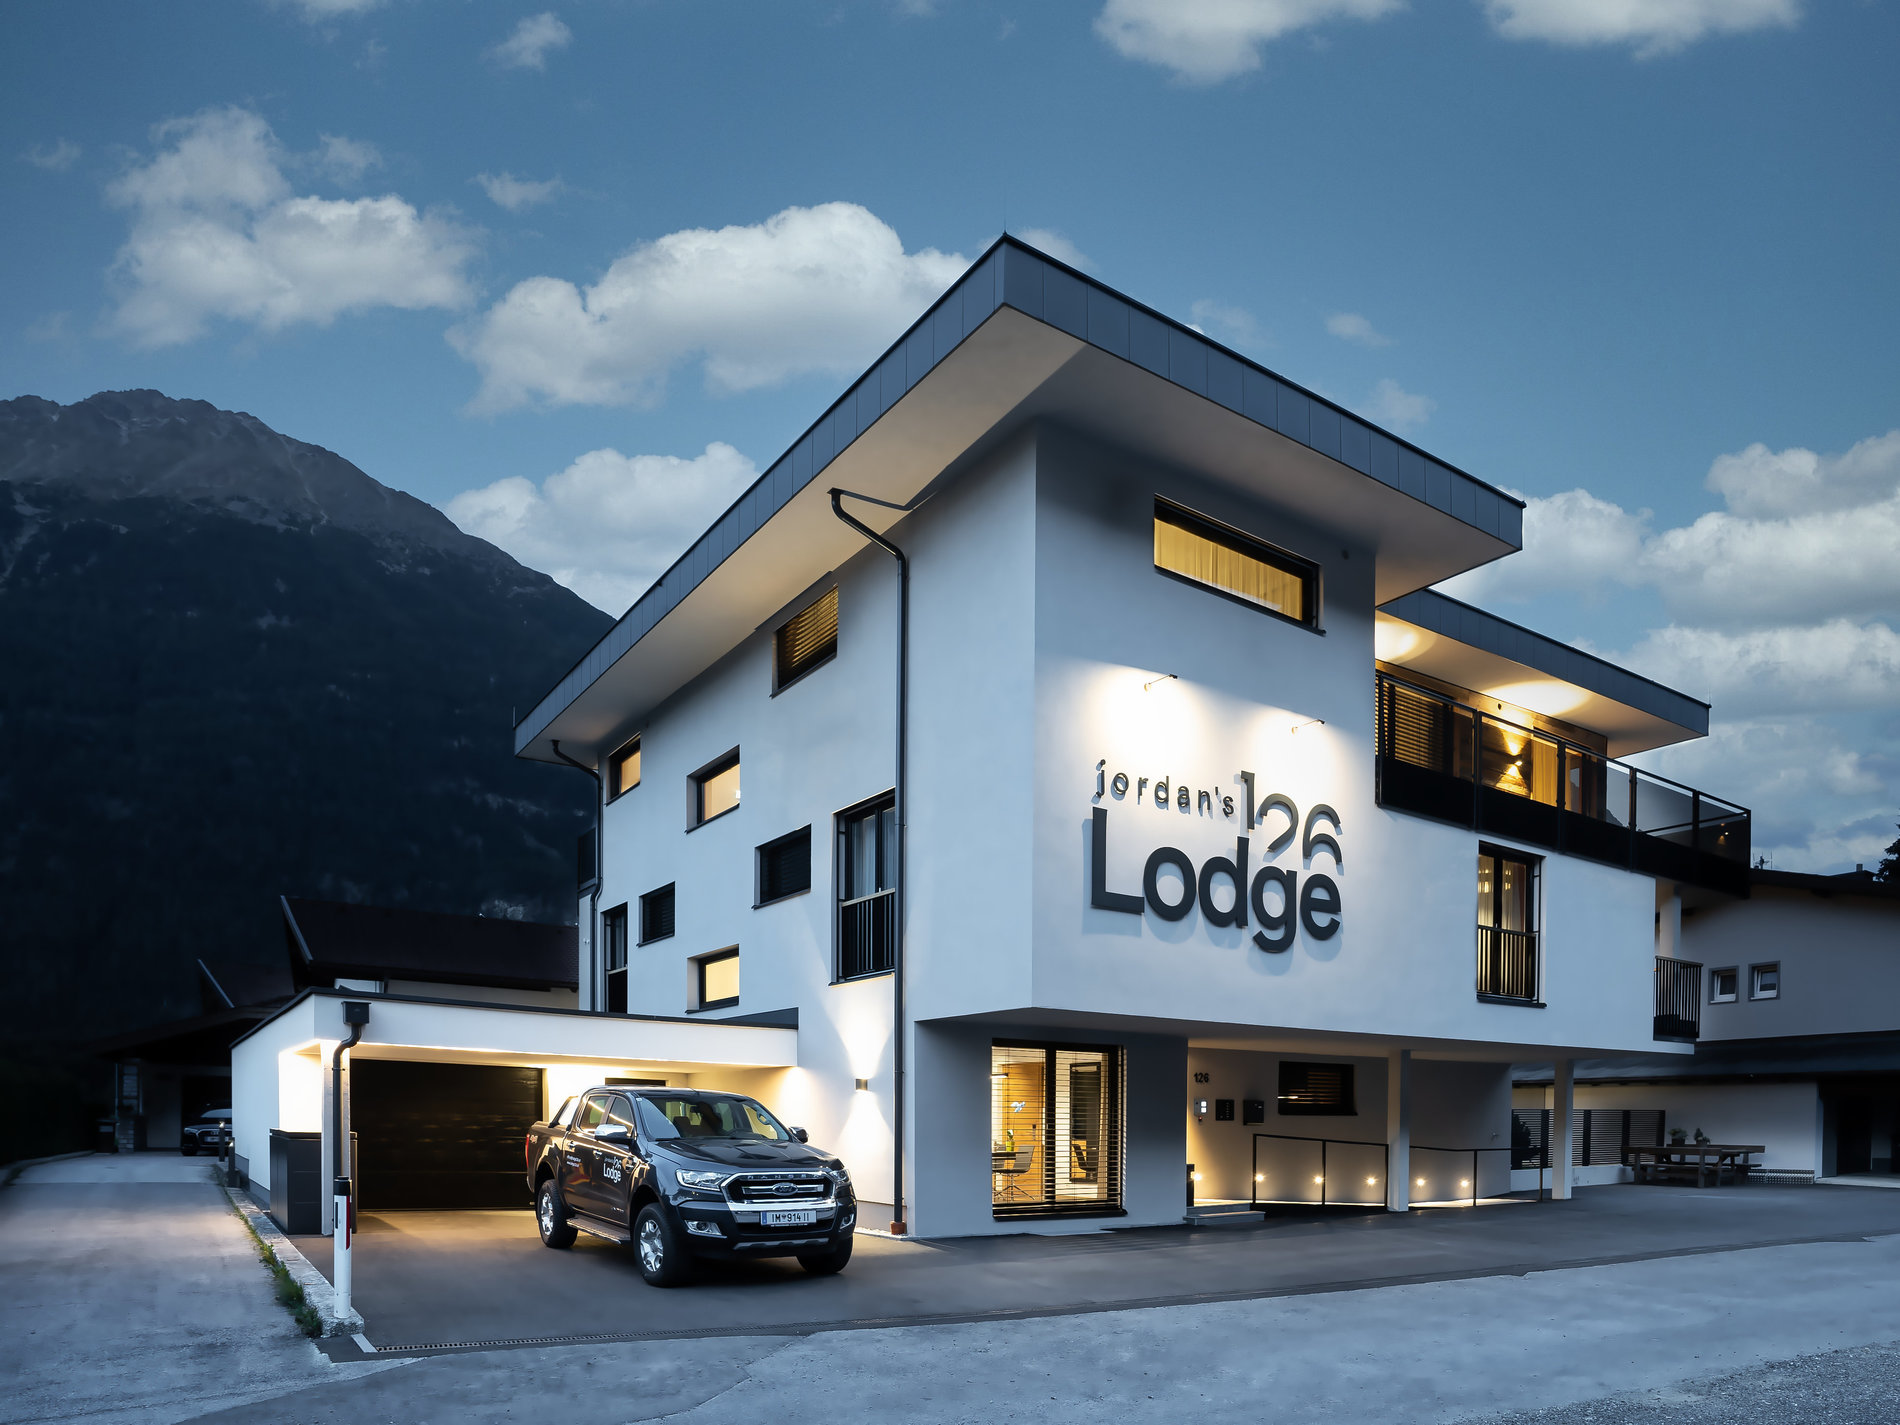 Jordan's Lodge126